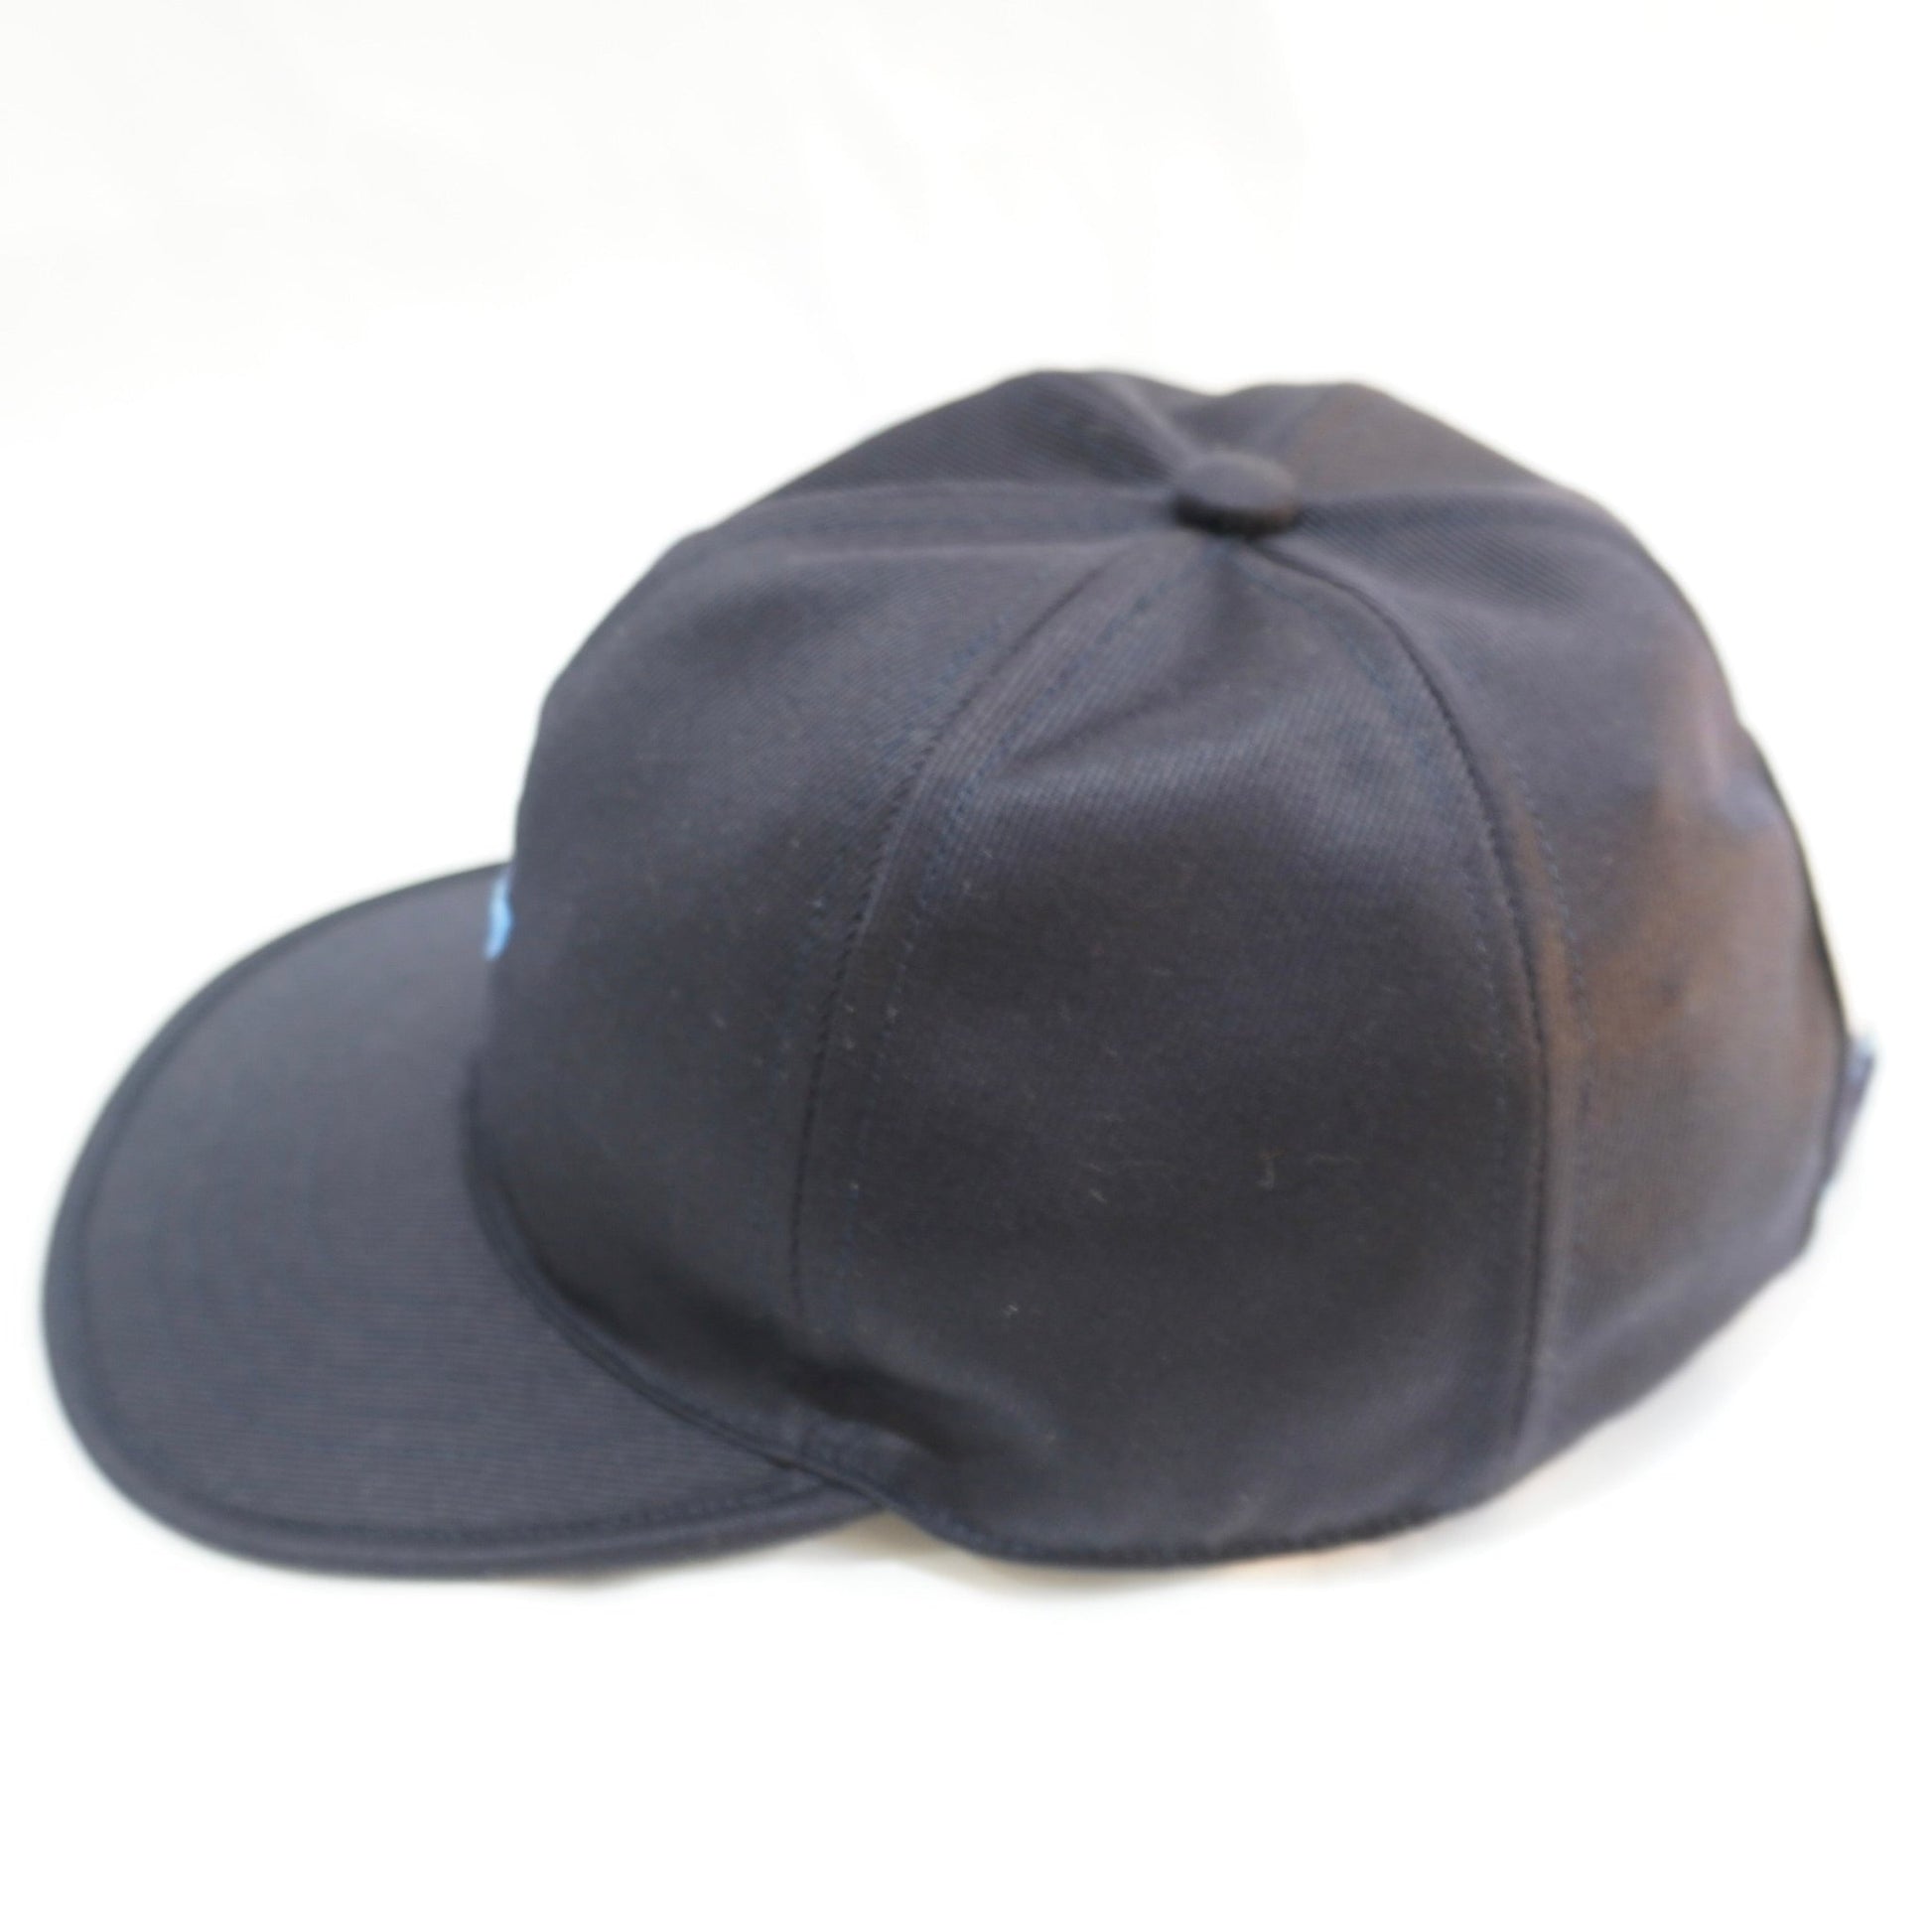 [syn.×butcher] 6 PANEL TAILOR CAP 帽子 - #shop_name #アパルティール# #名古屋# #セレクトショップ#